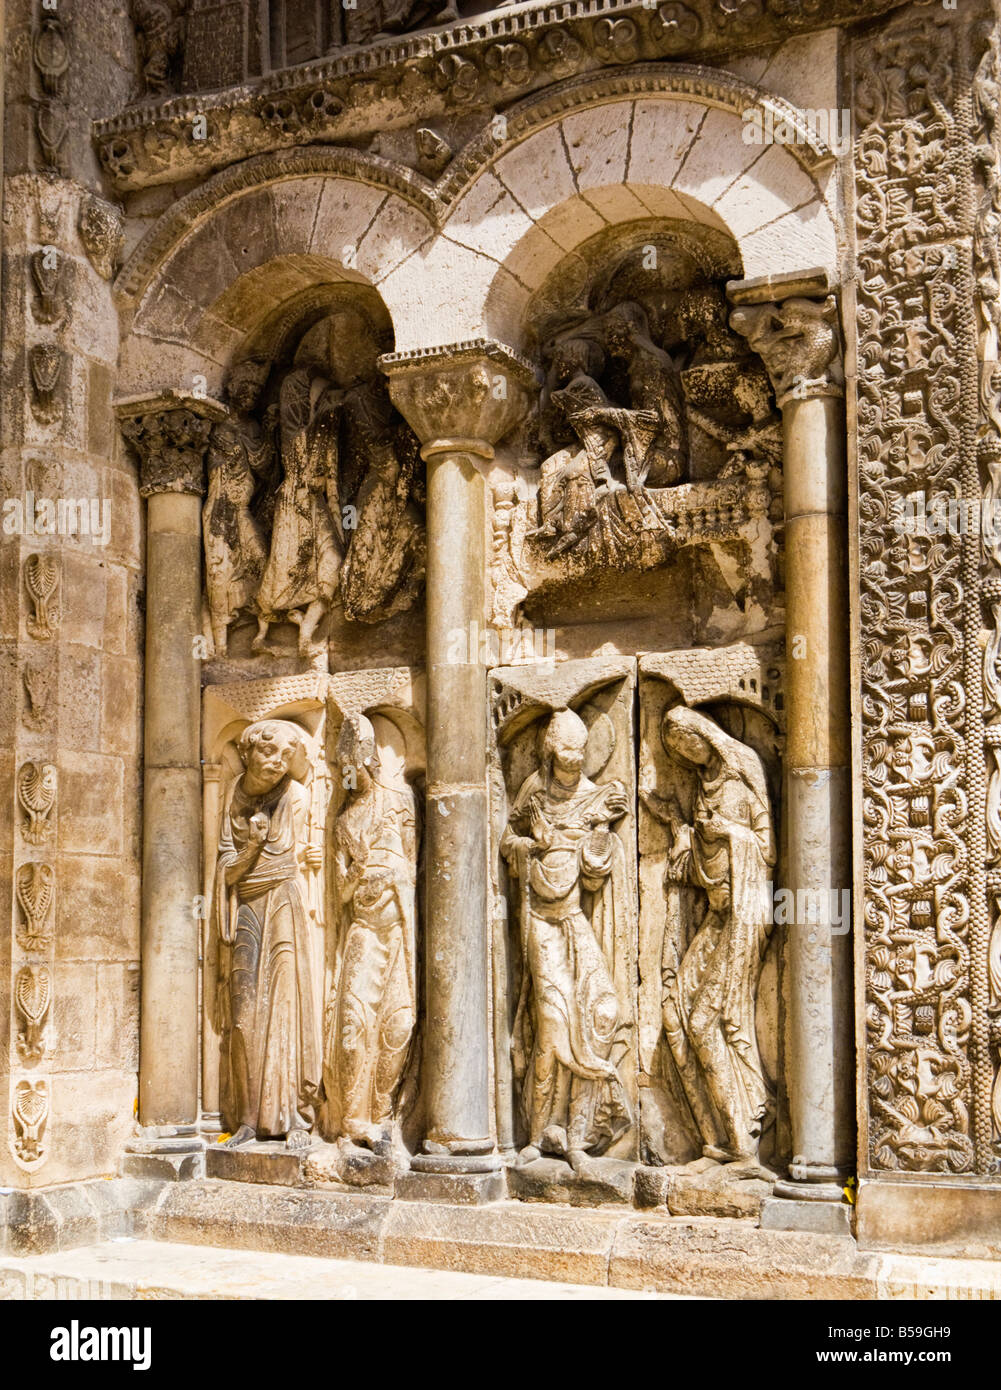 Relief sculptures at the entrance to the Abbaye Saint Pierre de Moissac, in Moissac, Tarn et Garonne, France Europe Stock Photo